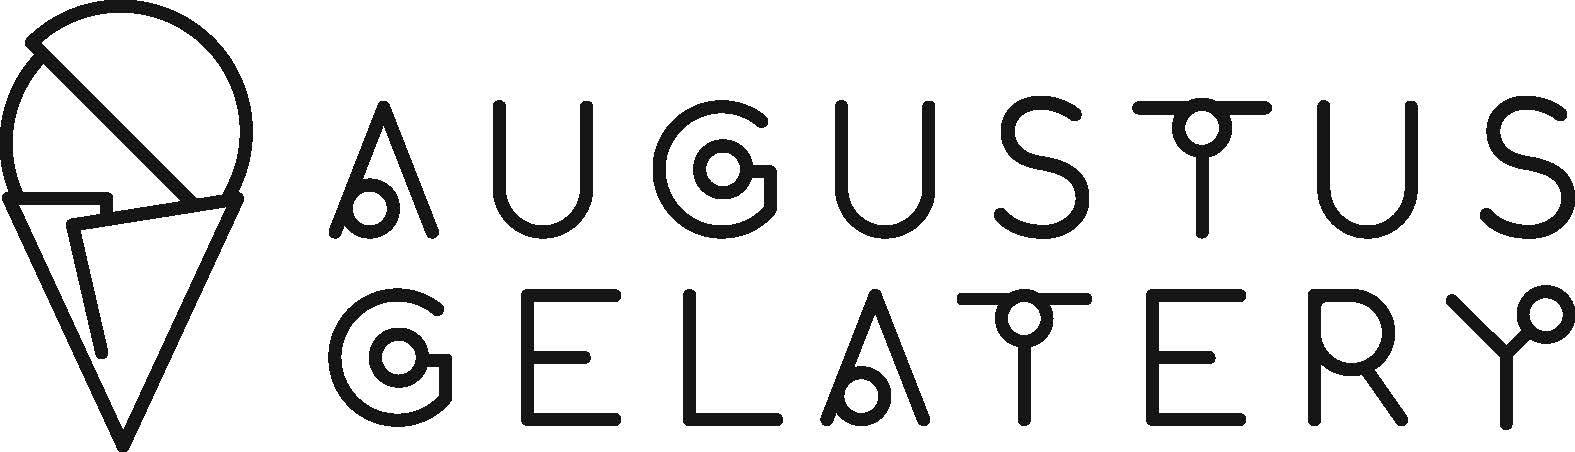 augustus gelatery logo